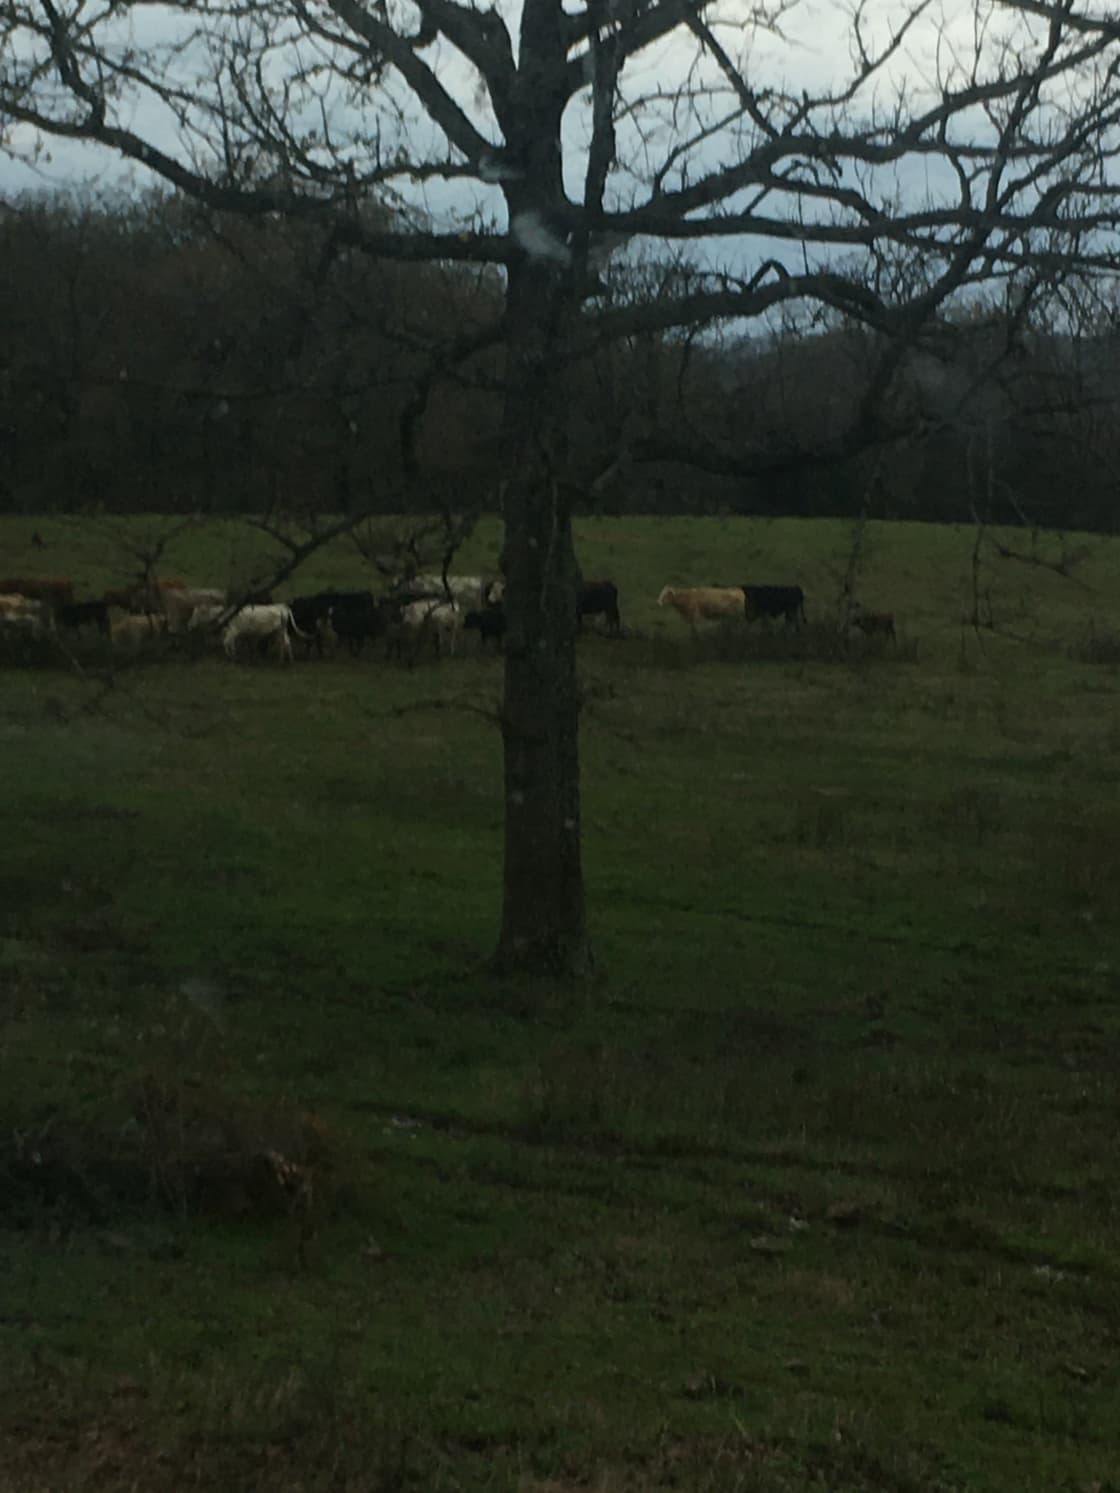 More cows